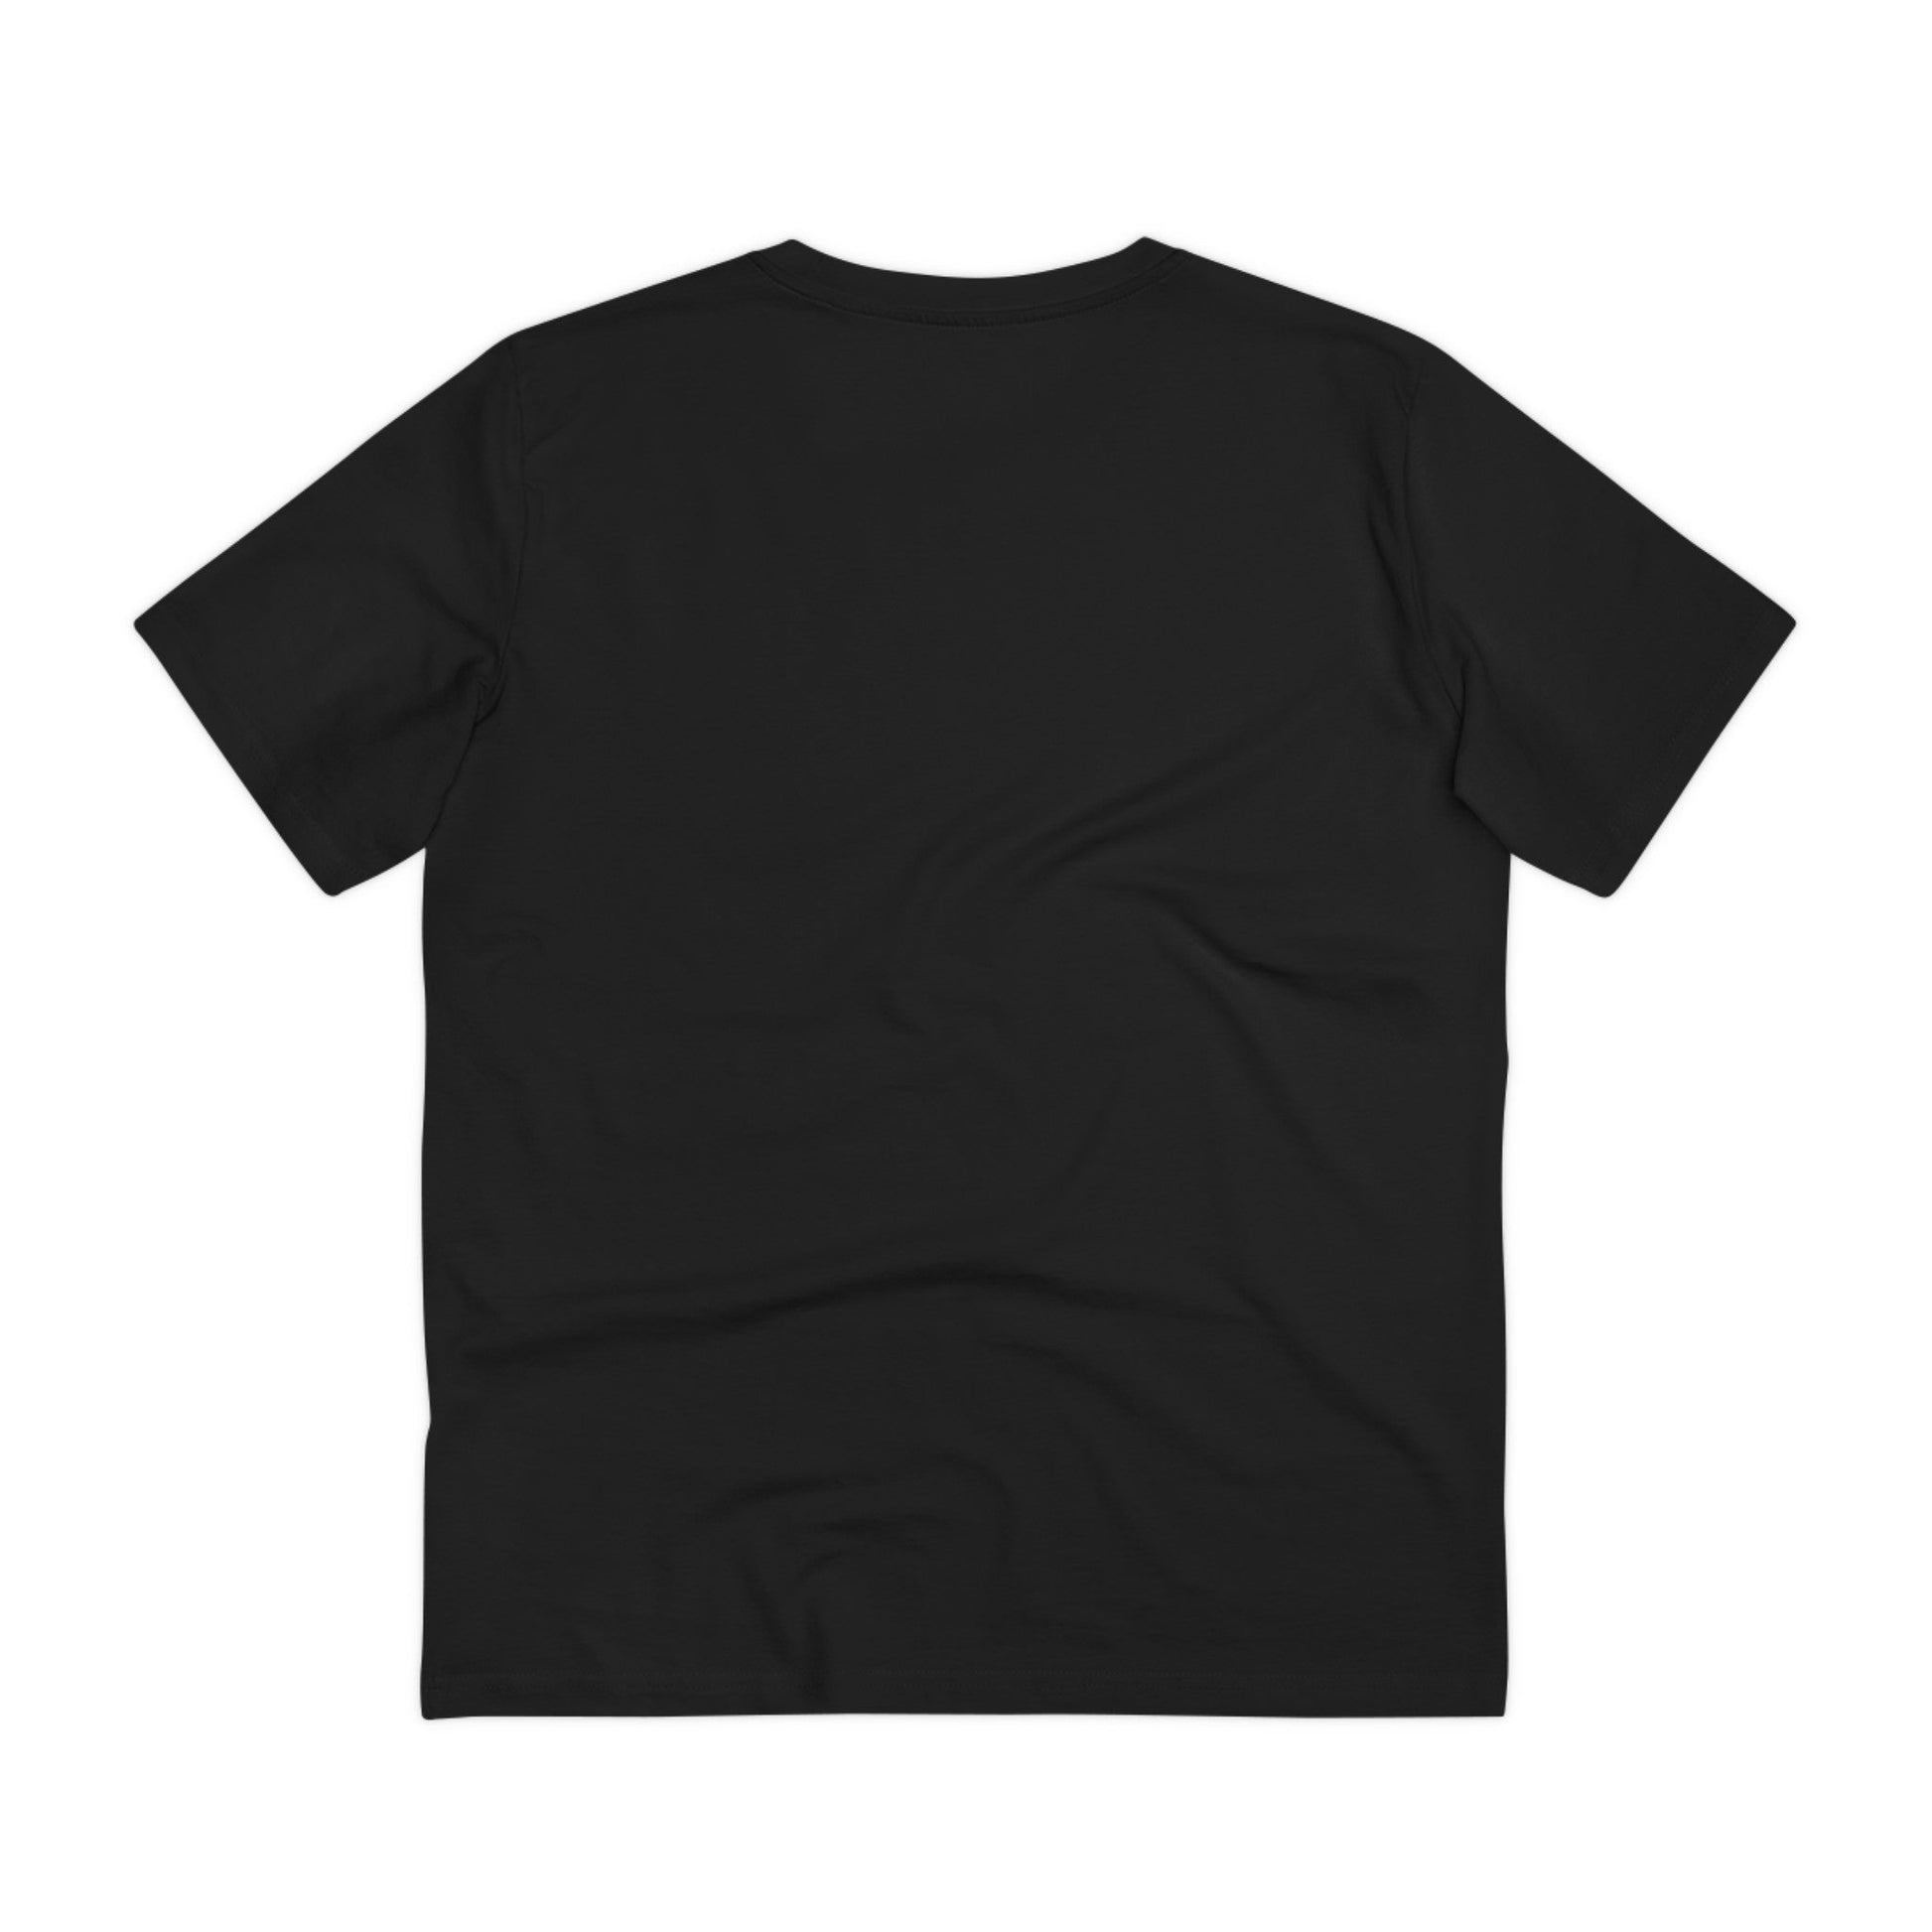 Printify T-Shirt Generation Z Representation - Streetwear - Gods Way - Front Design